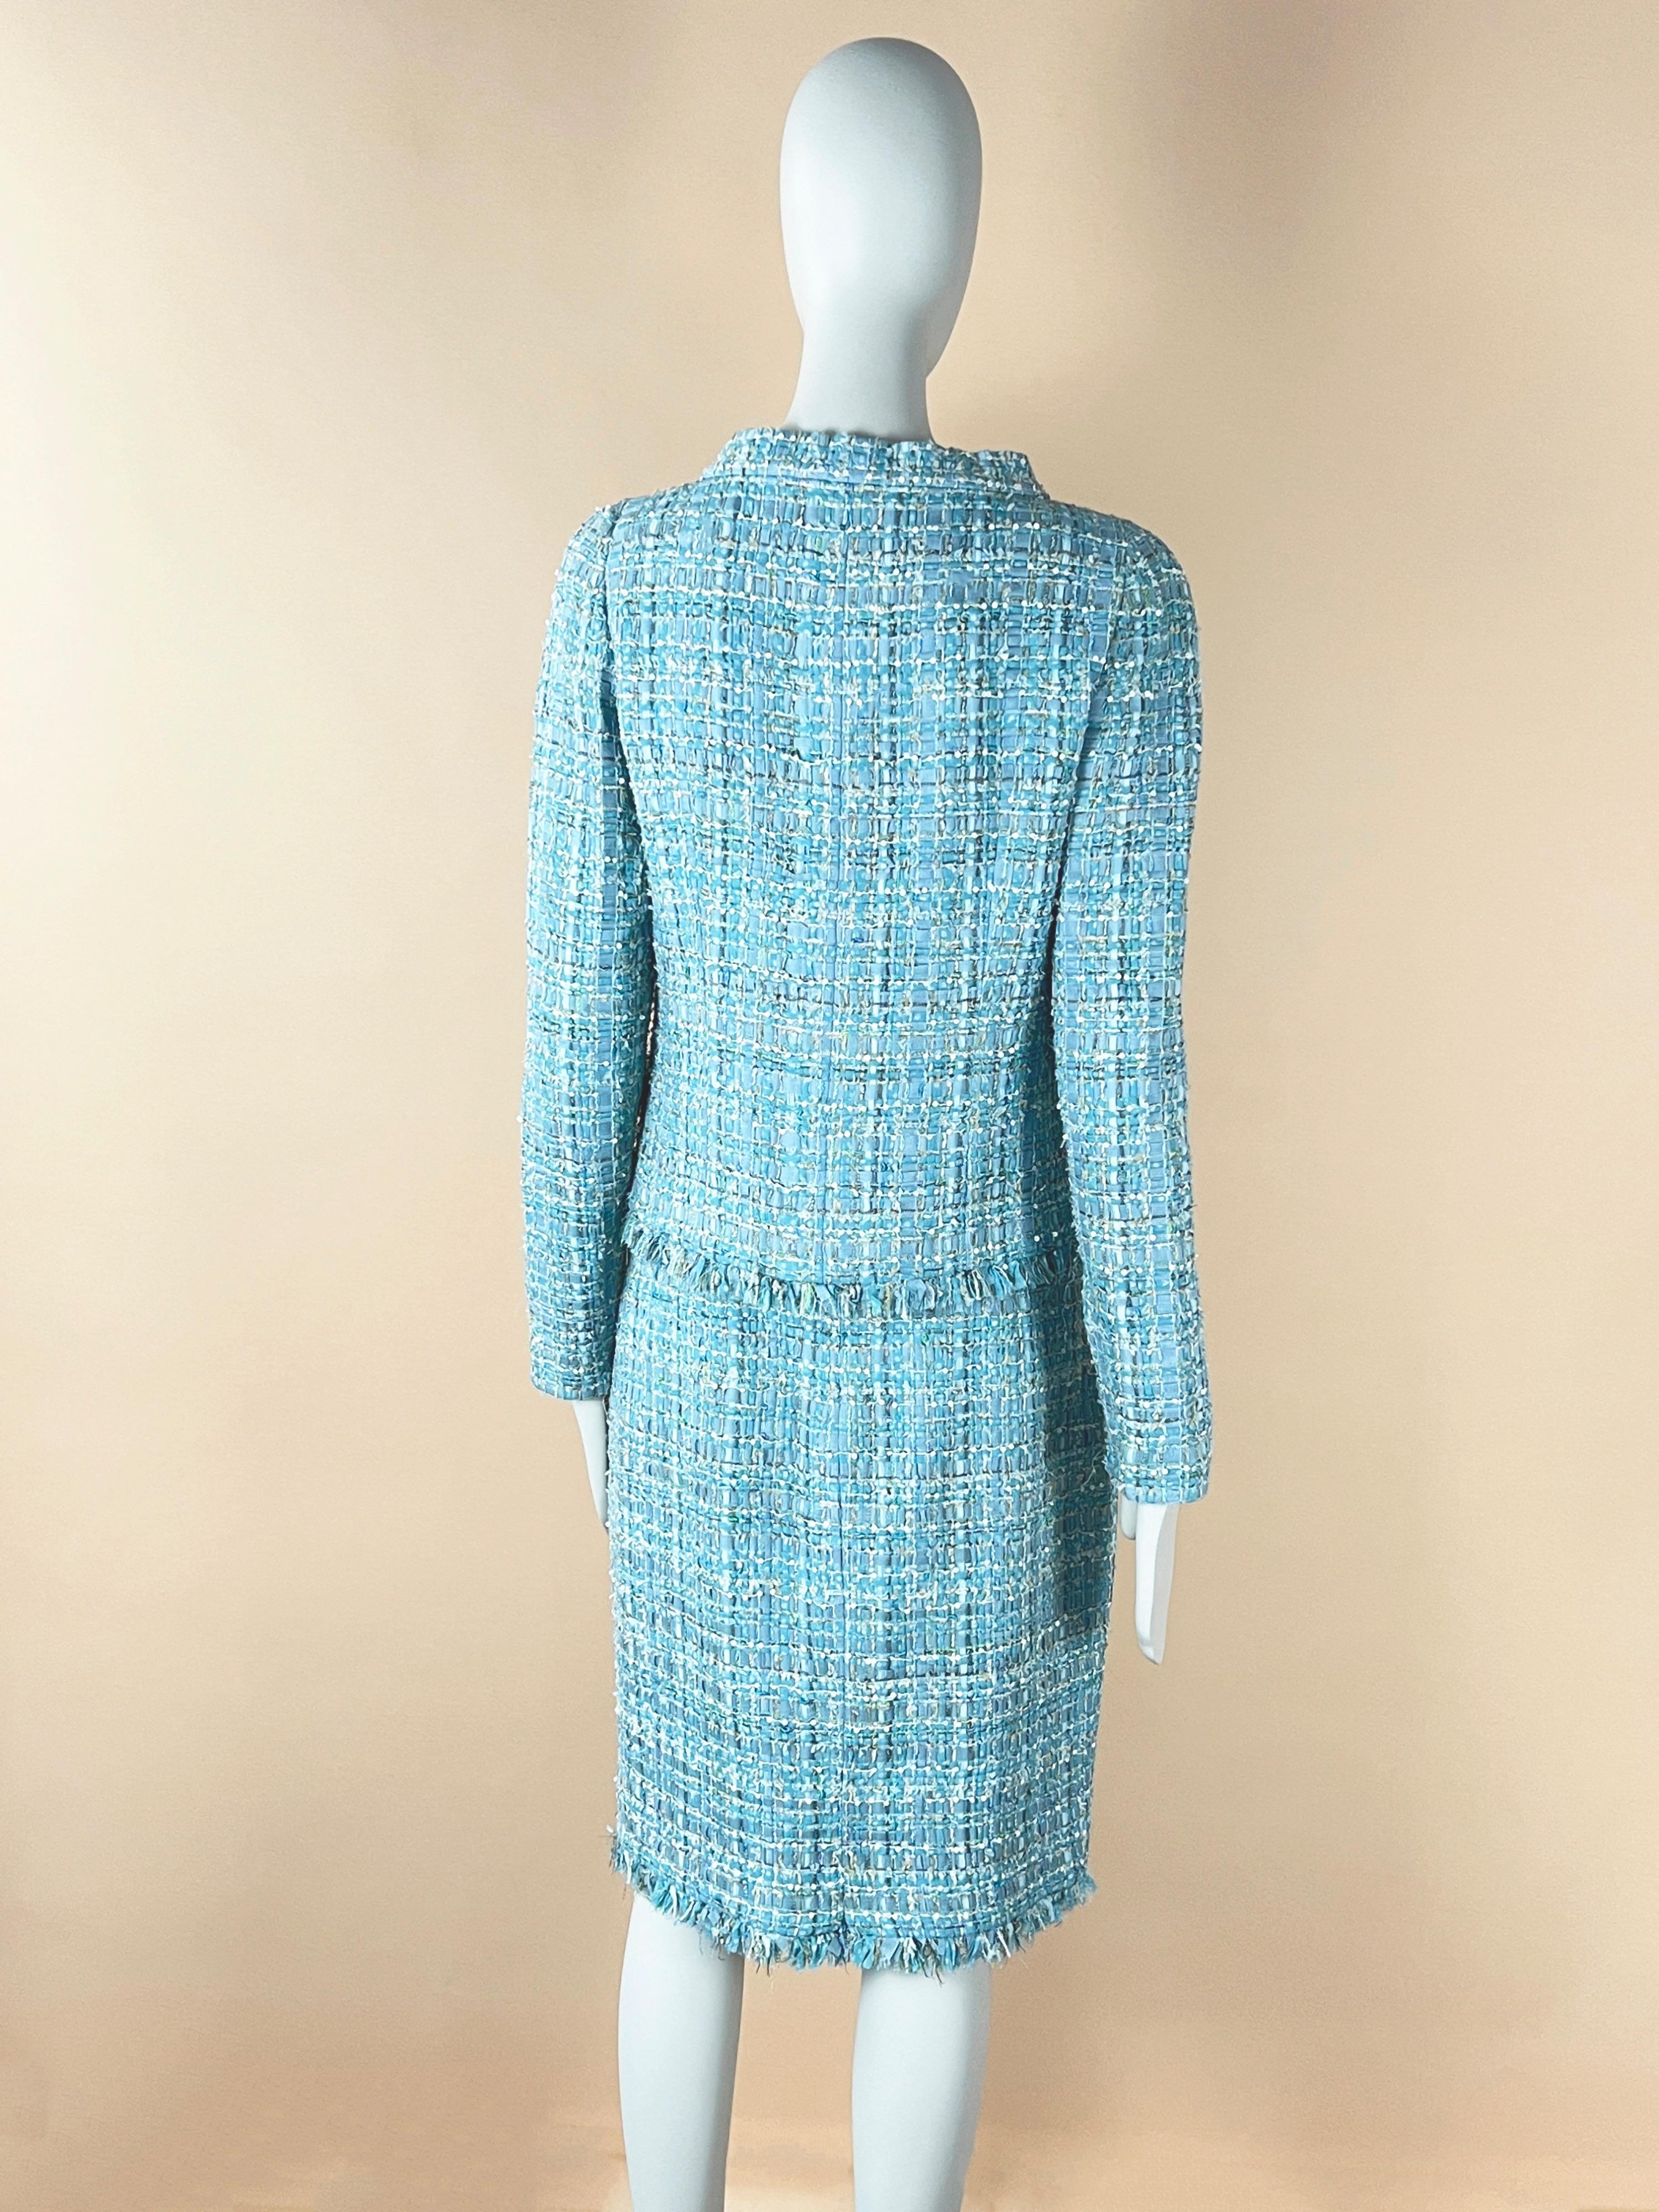 Chanel Turquoise Ribbon Tweed Jacket and Skirt  9